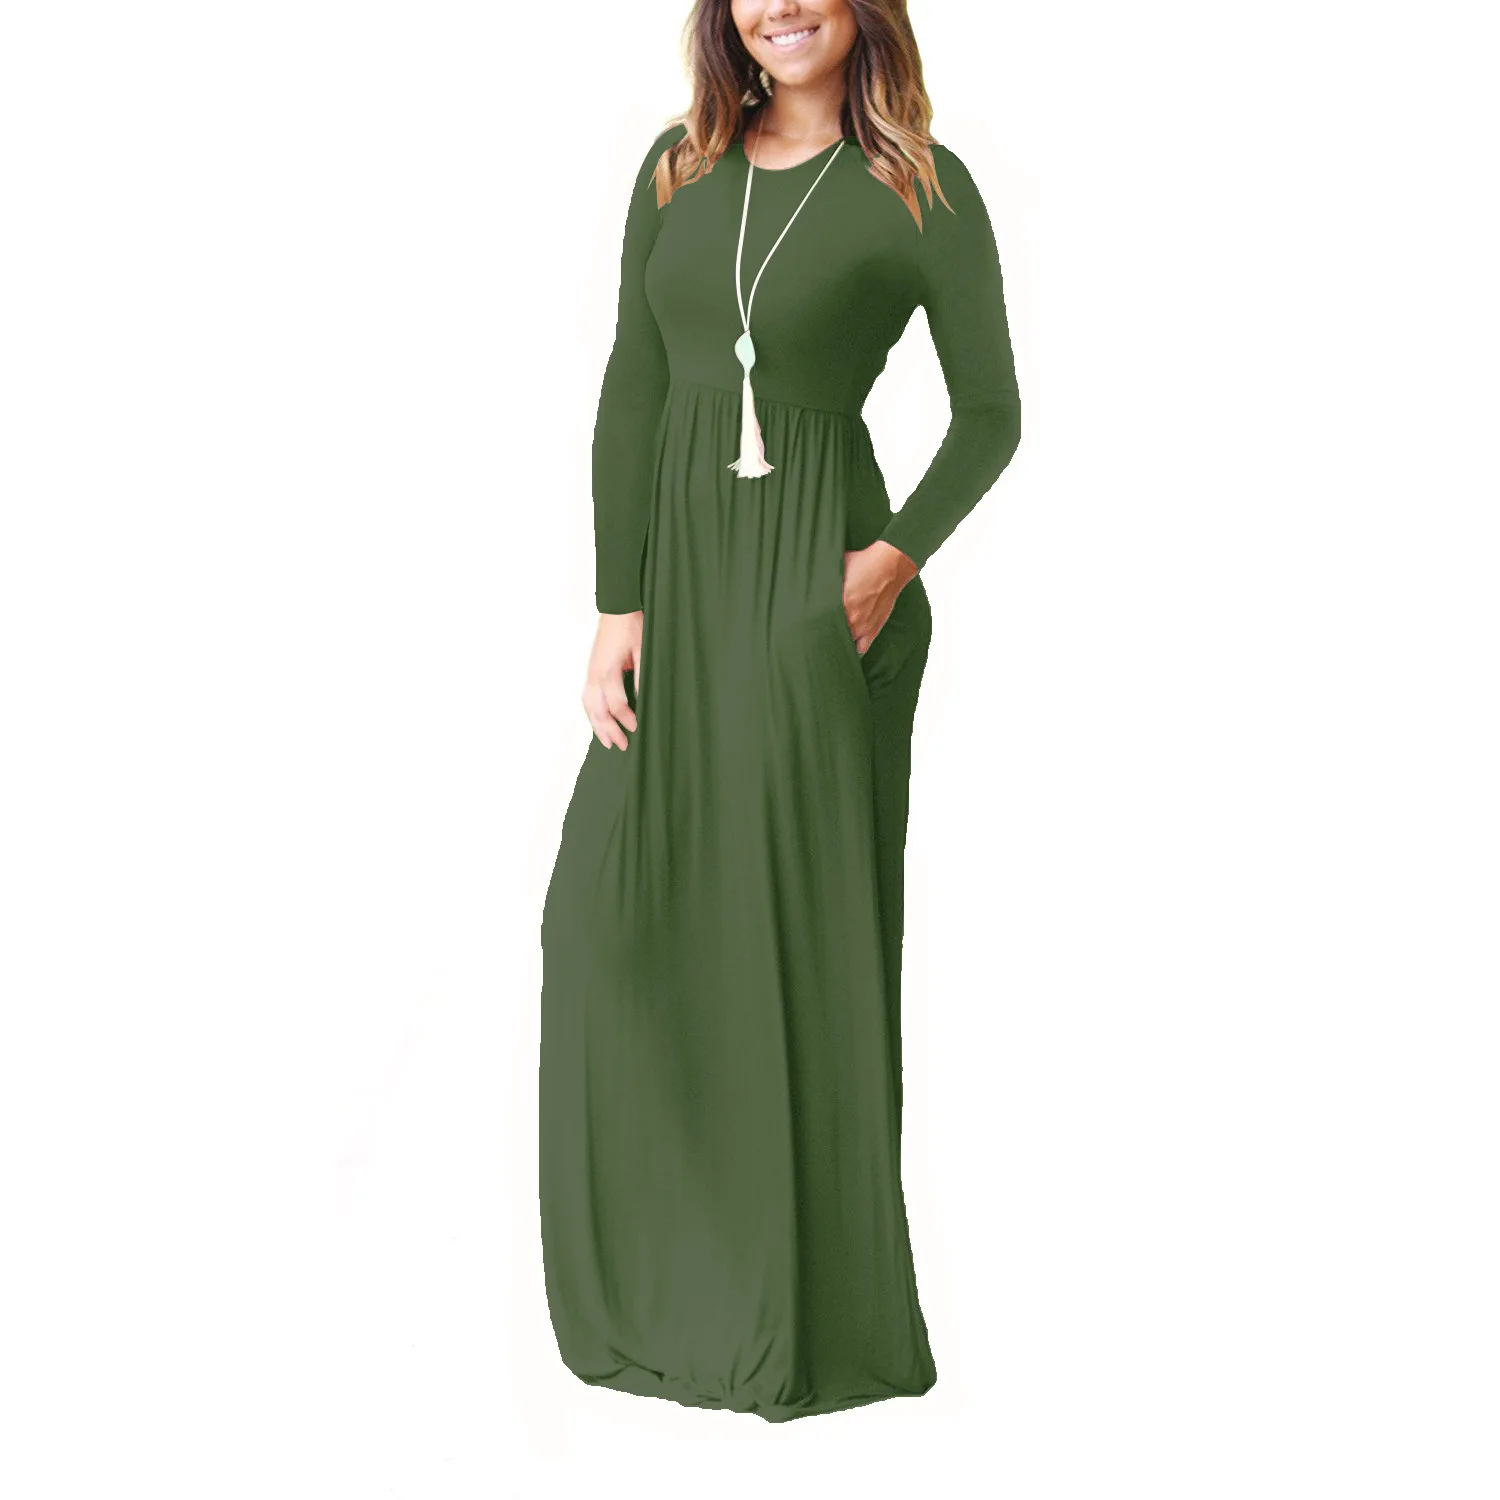 2020 Women Islamic Abaya Turkey Casual Solid Color Long Sleeves Modal ...